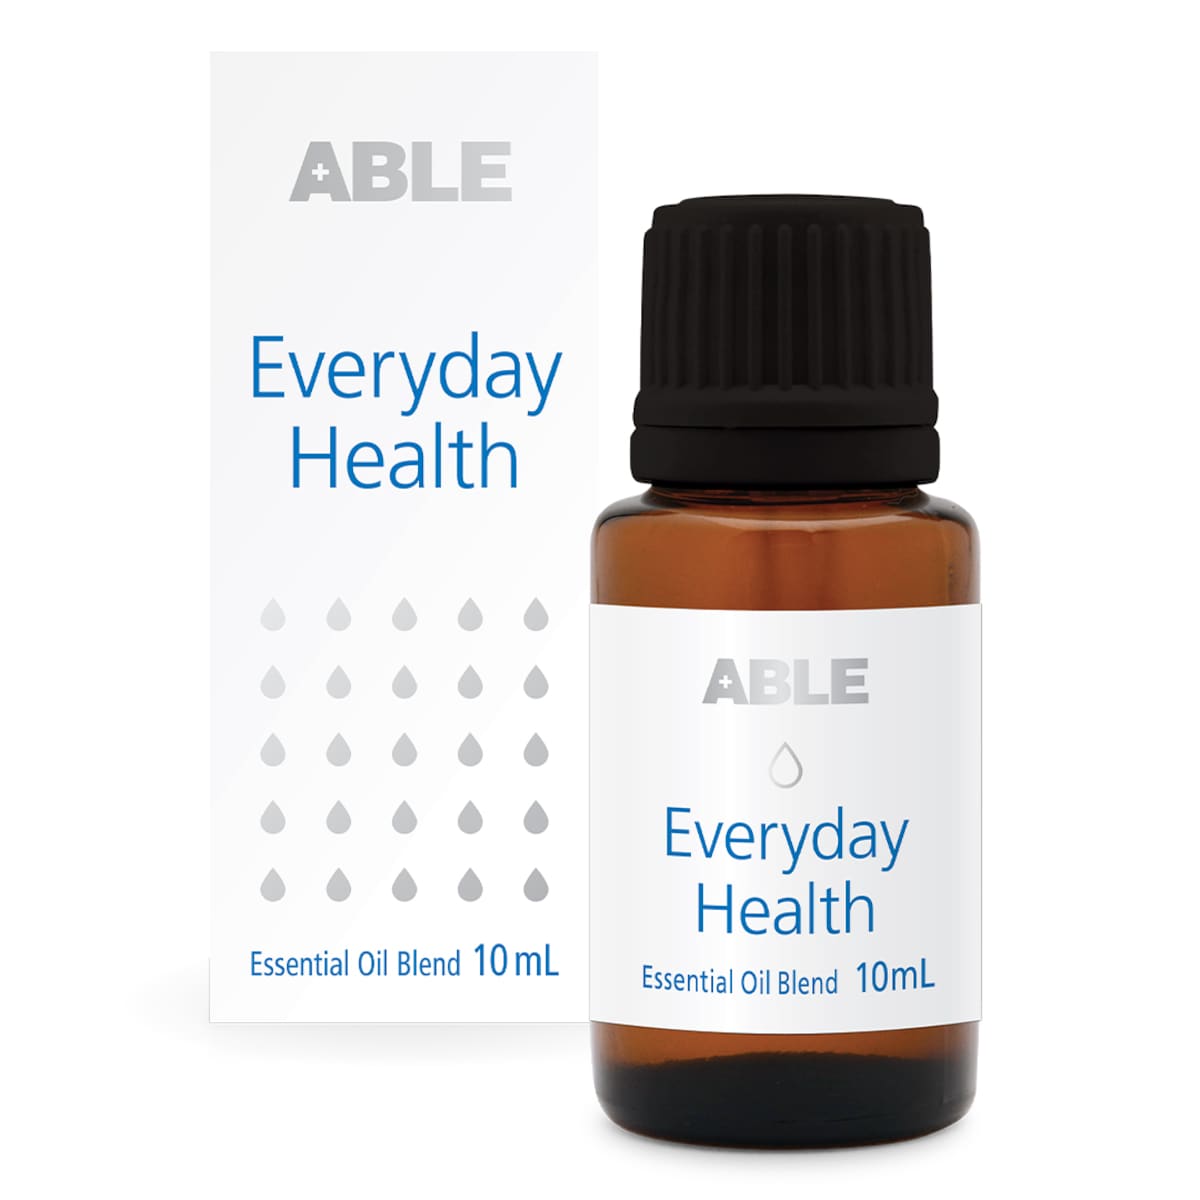 ABLE Vaporiser Essential Oil Everyday Health Blend 10ml